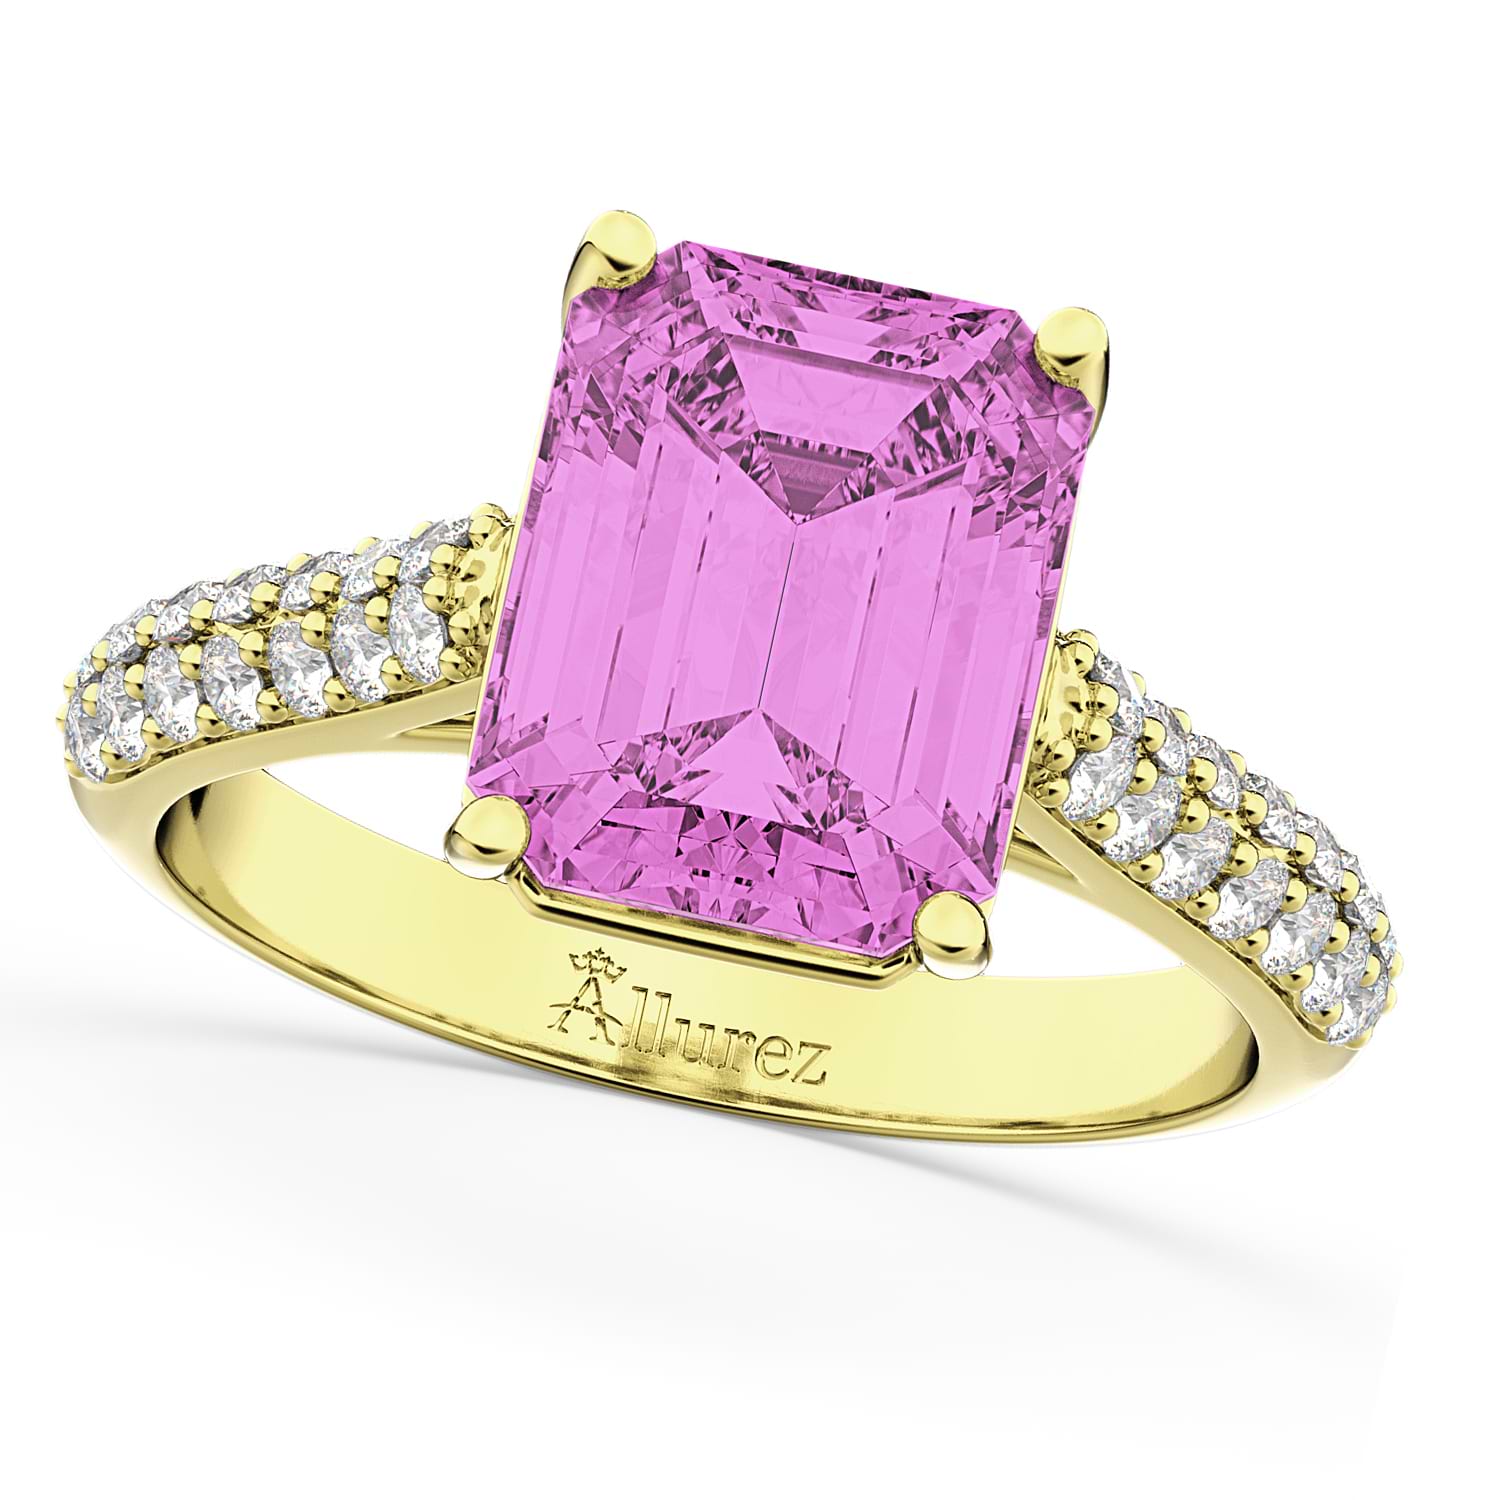 Emerald-Cut Pink Sapphire & Diamond Ring 18k Yellow Gold (5.54ct)